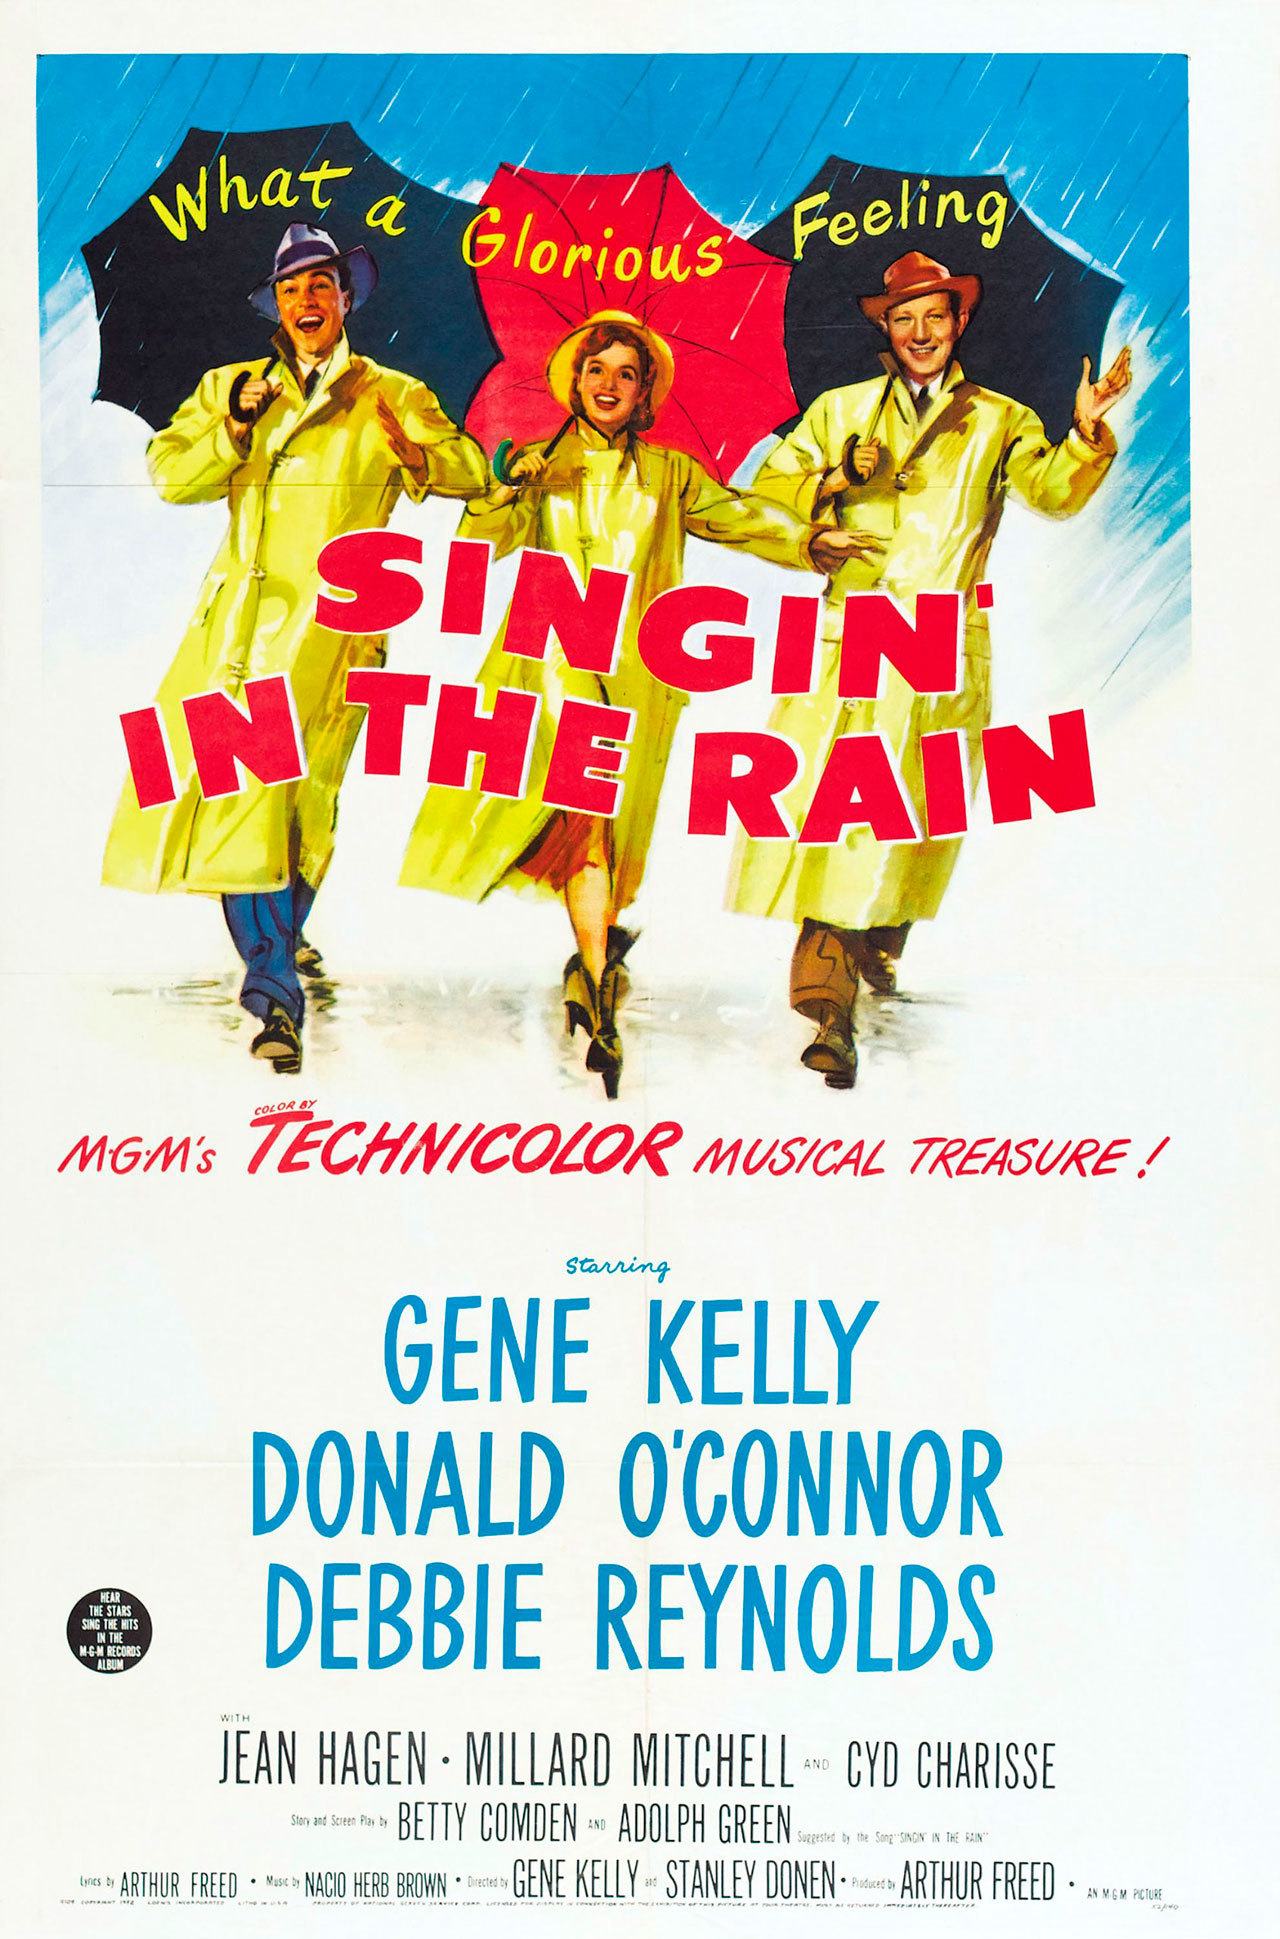 ‘Singin’ in the Rain’ returns to the big screen